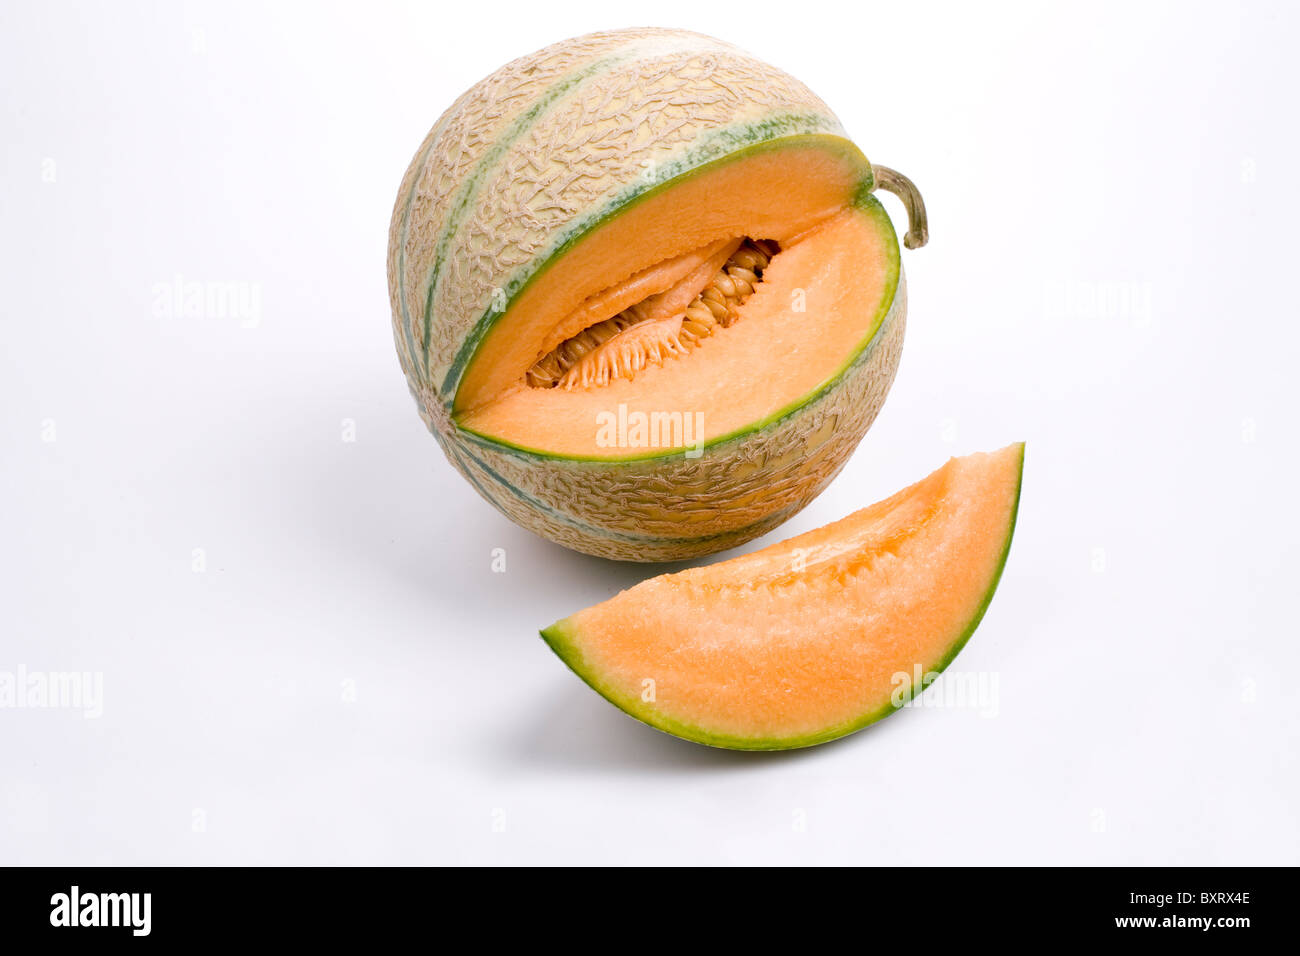 Cantaloupe melon, close-up Stock Photo